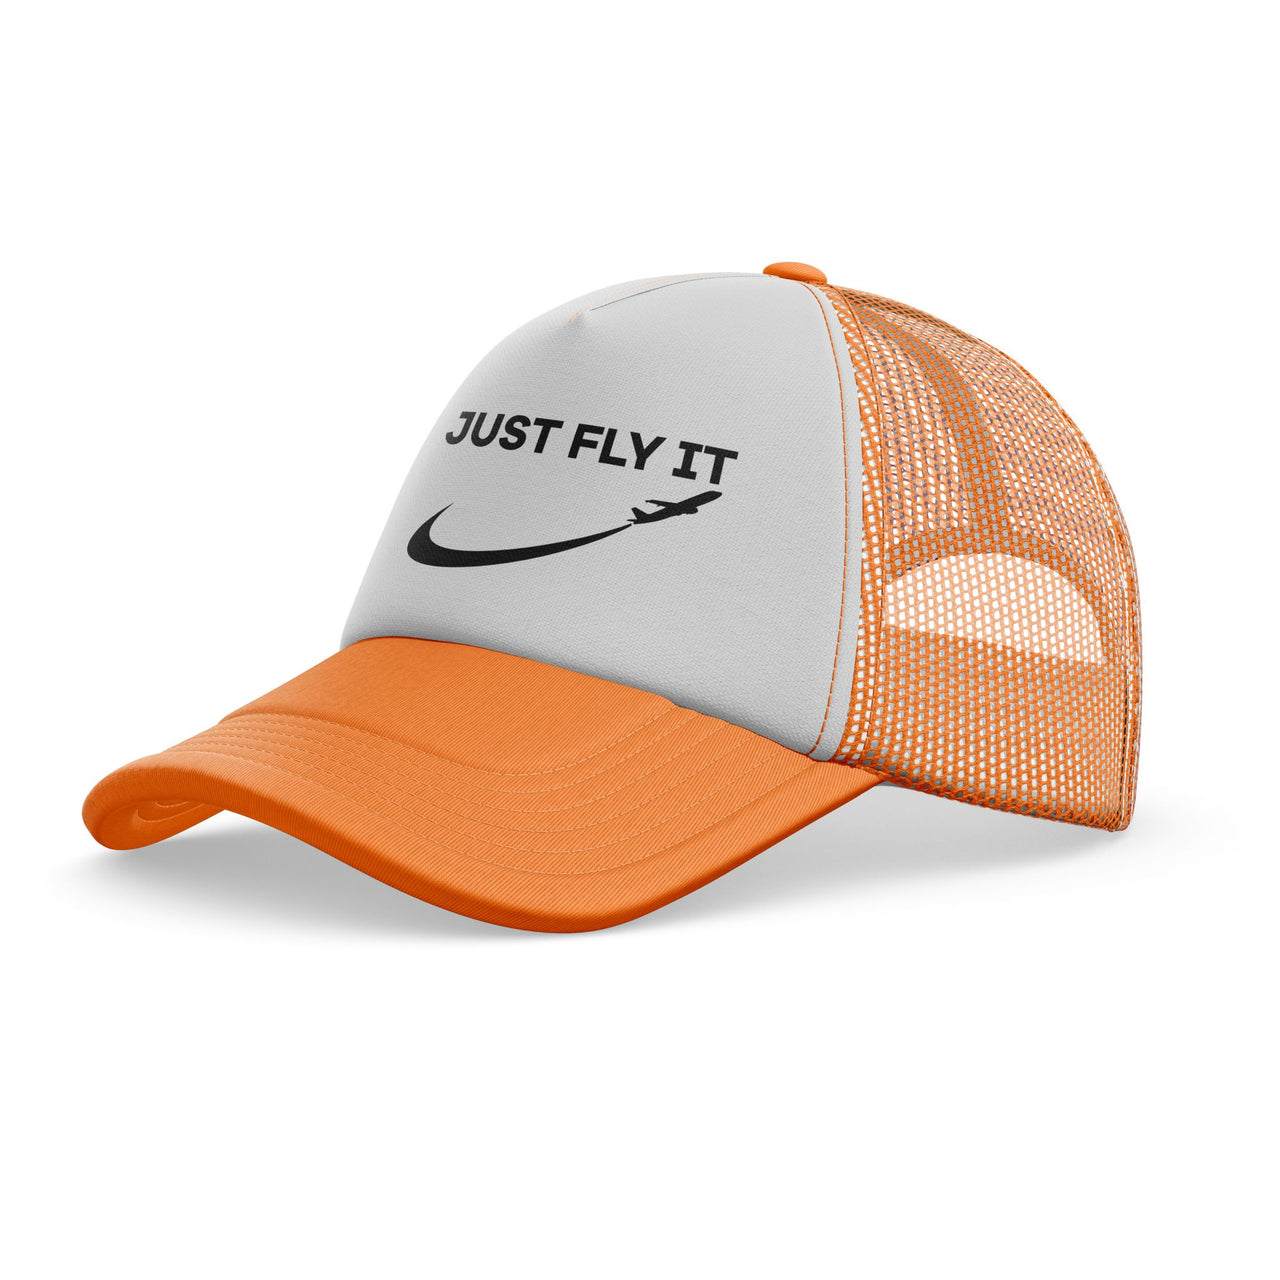 Just Fly It 2 Designed Trucker Caps & Hats